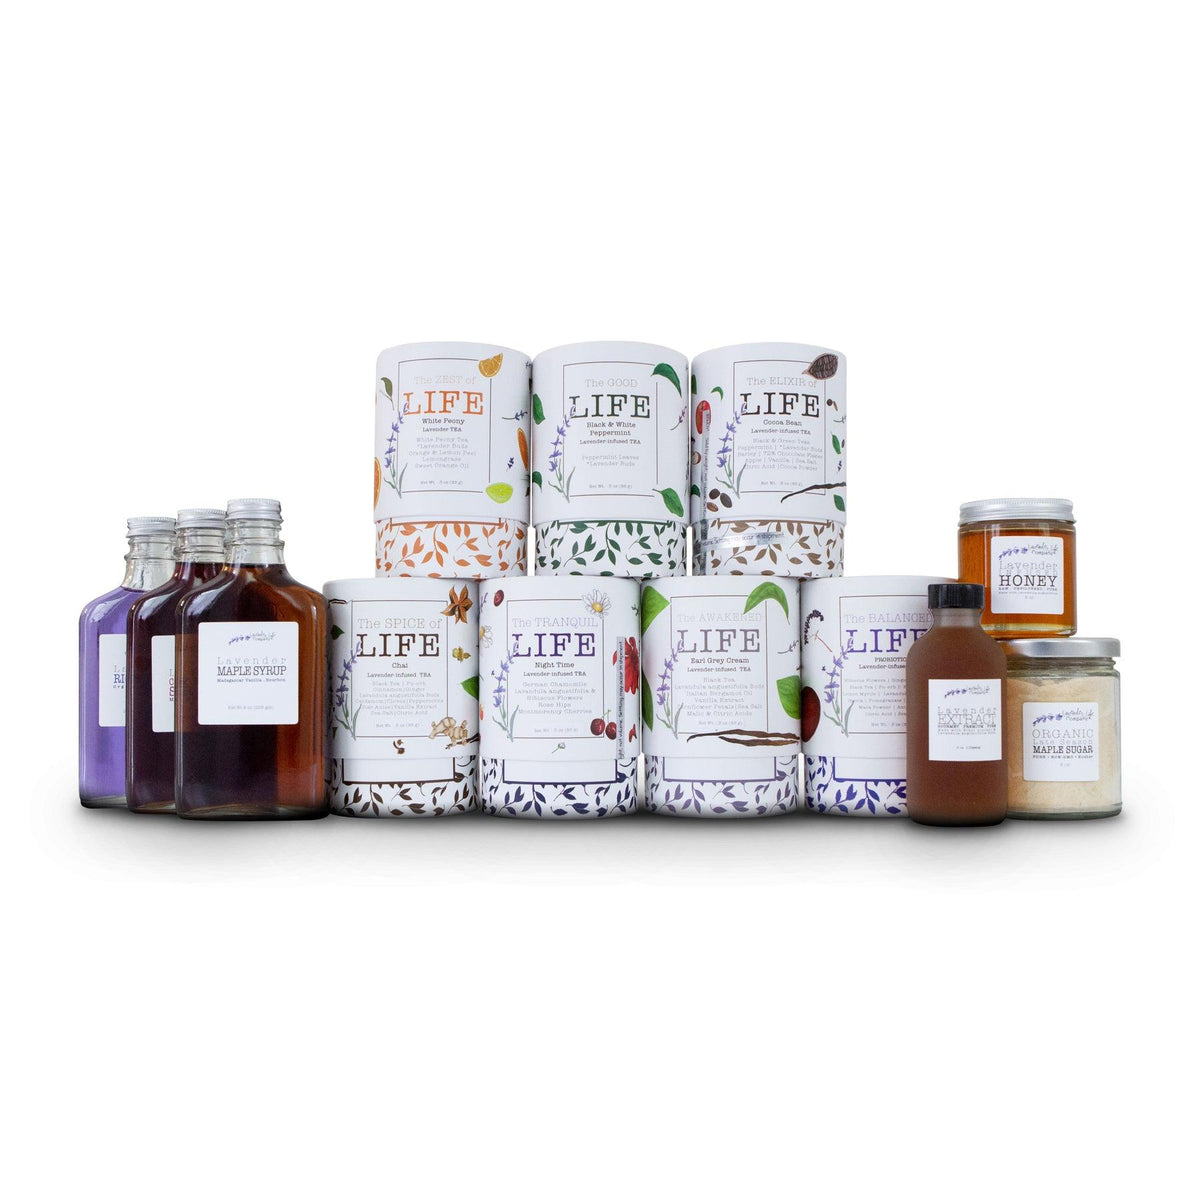 Teetotaler Master Tea Set - Lavender Life Company